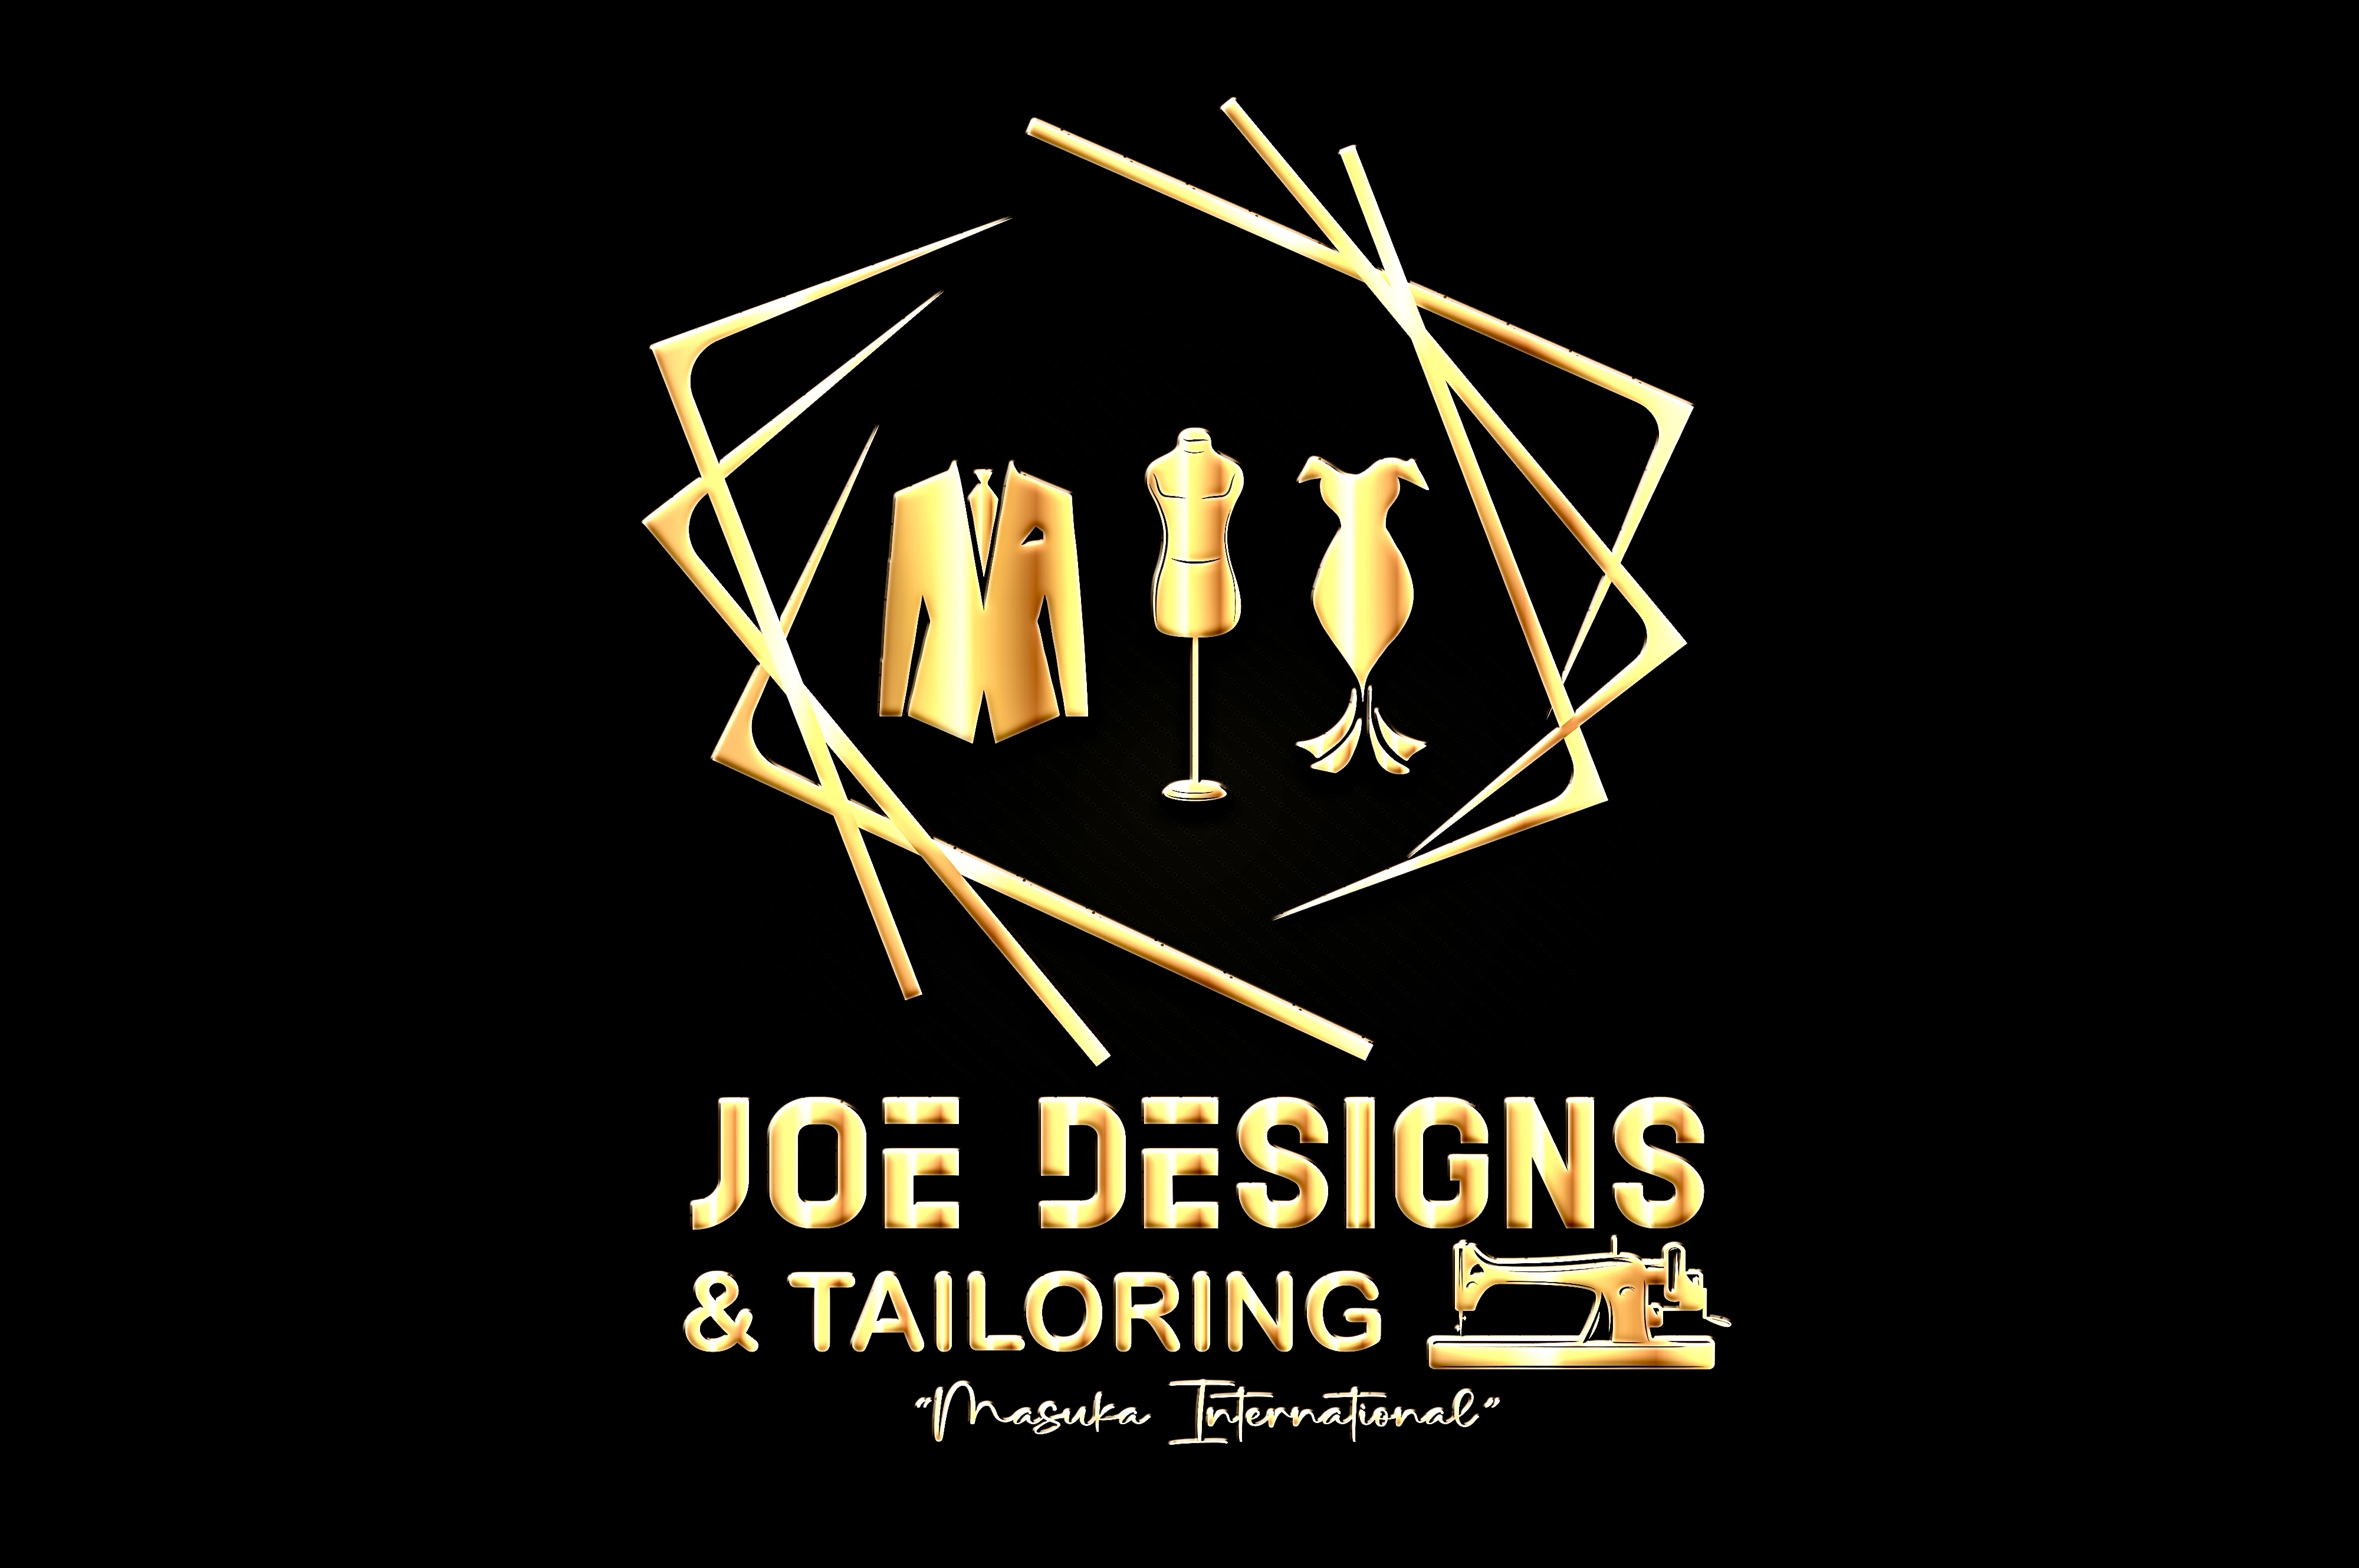 Joe Designs and Tailoring